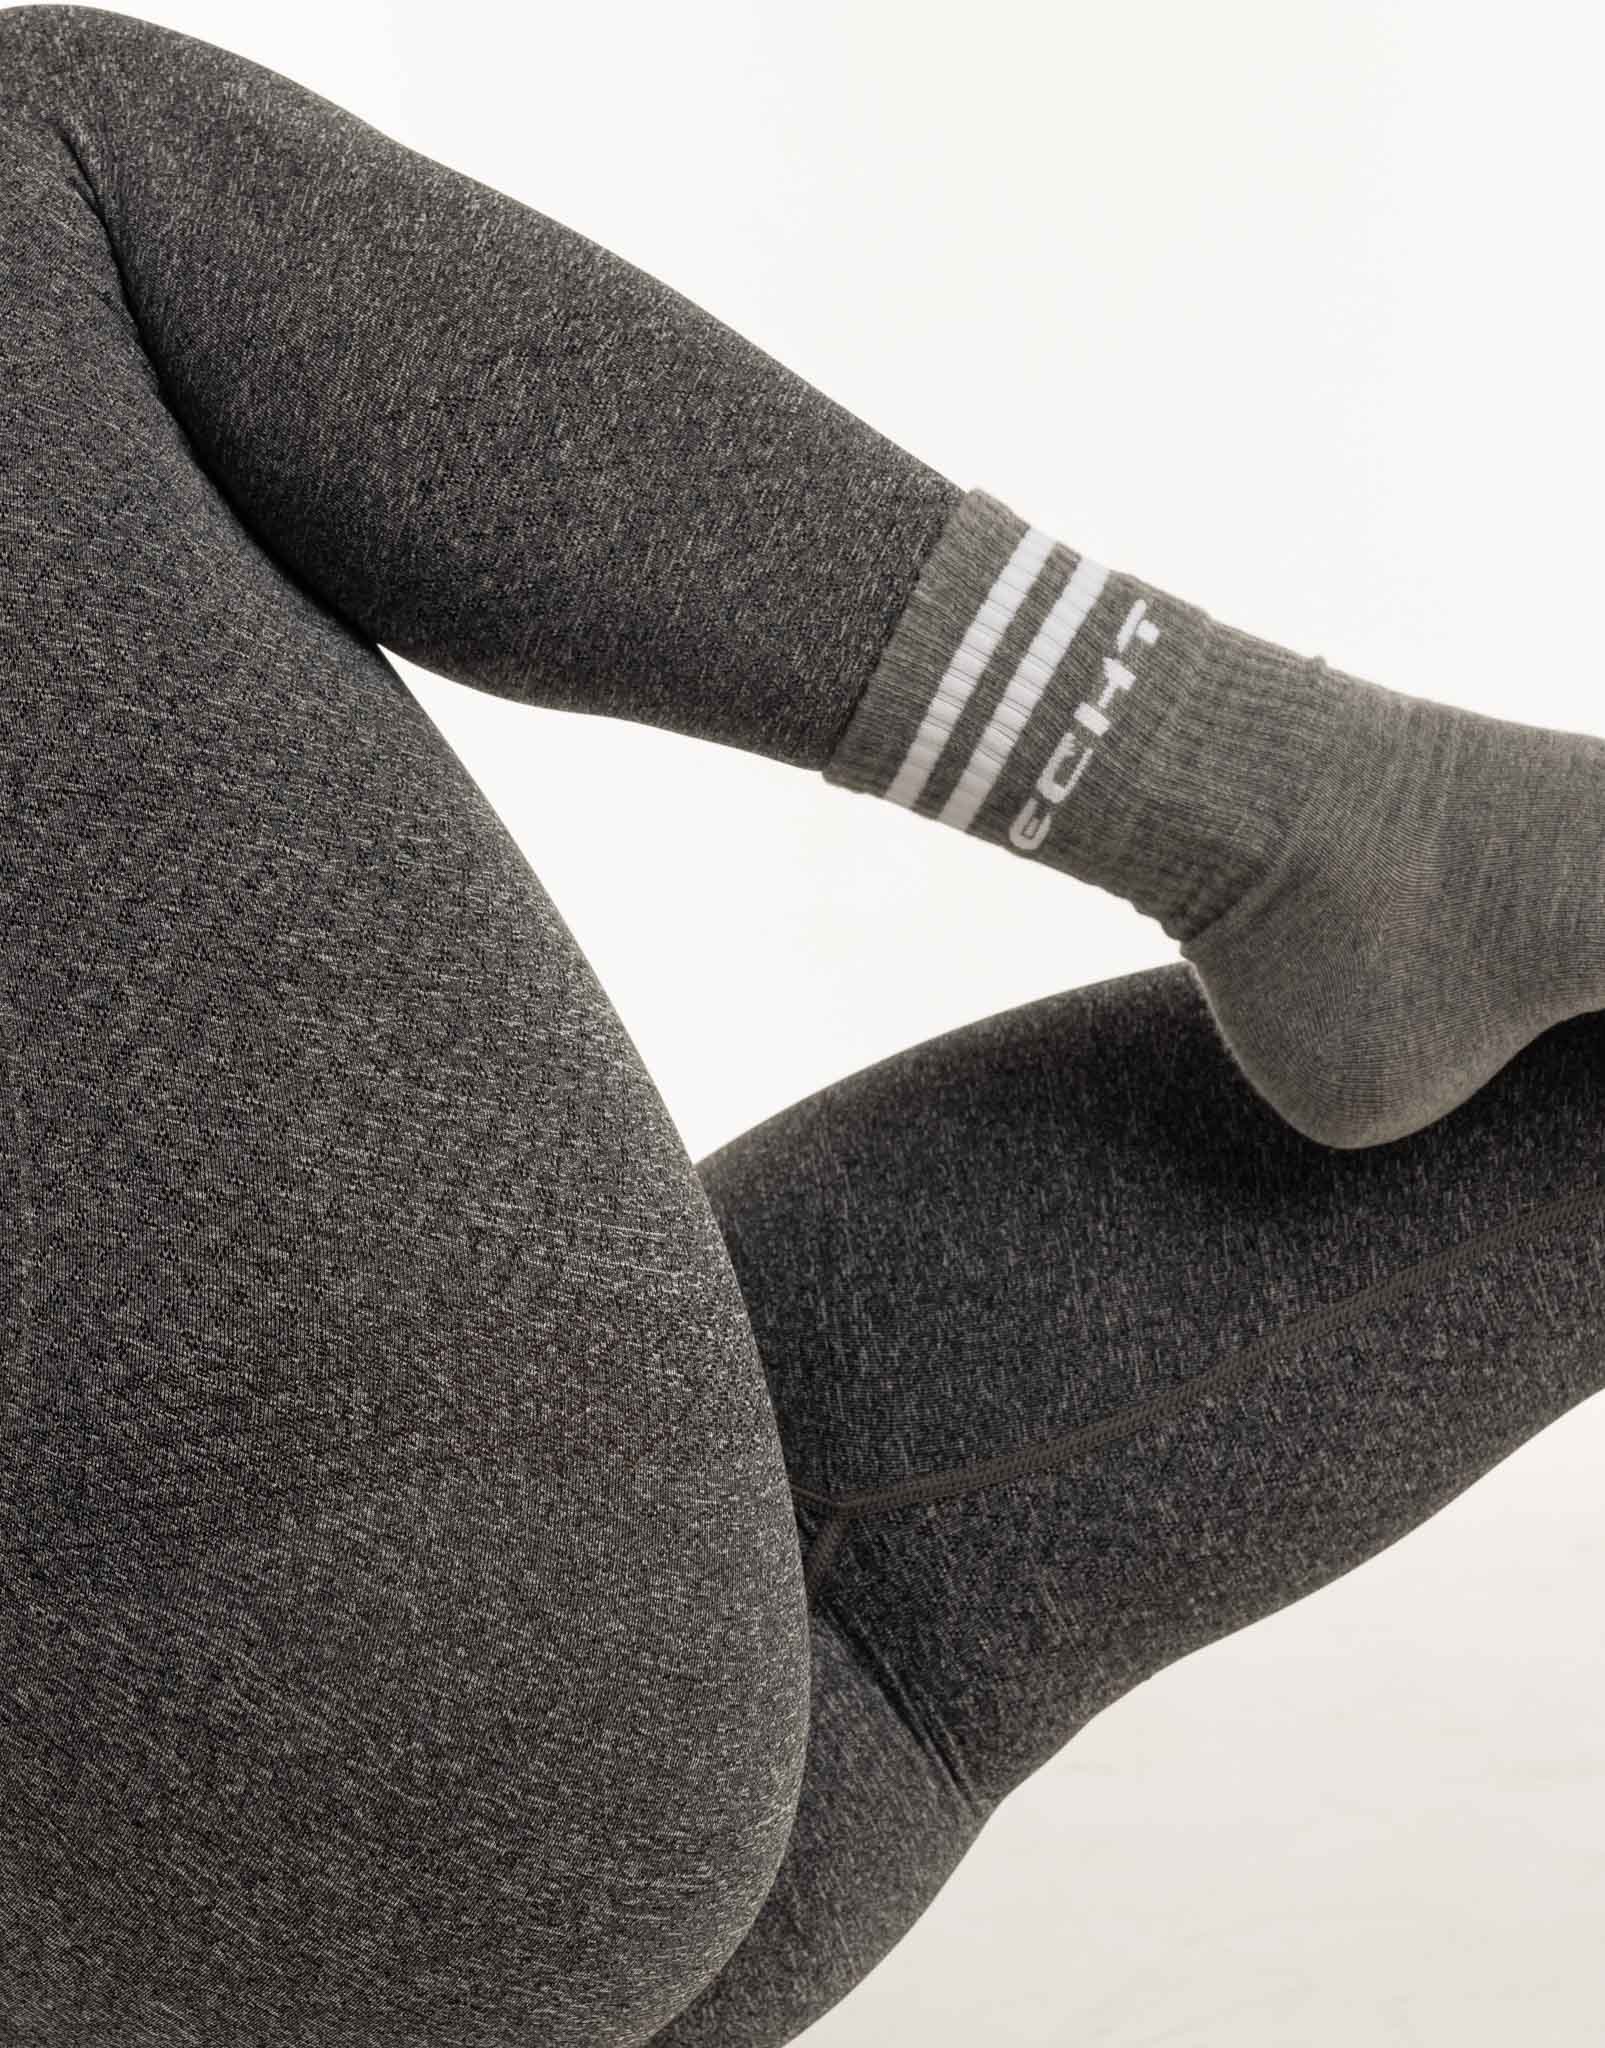 Stripe Socks (1 Pair) - Charcoal